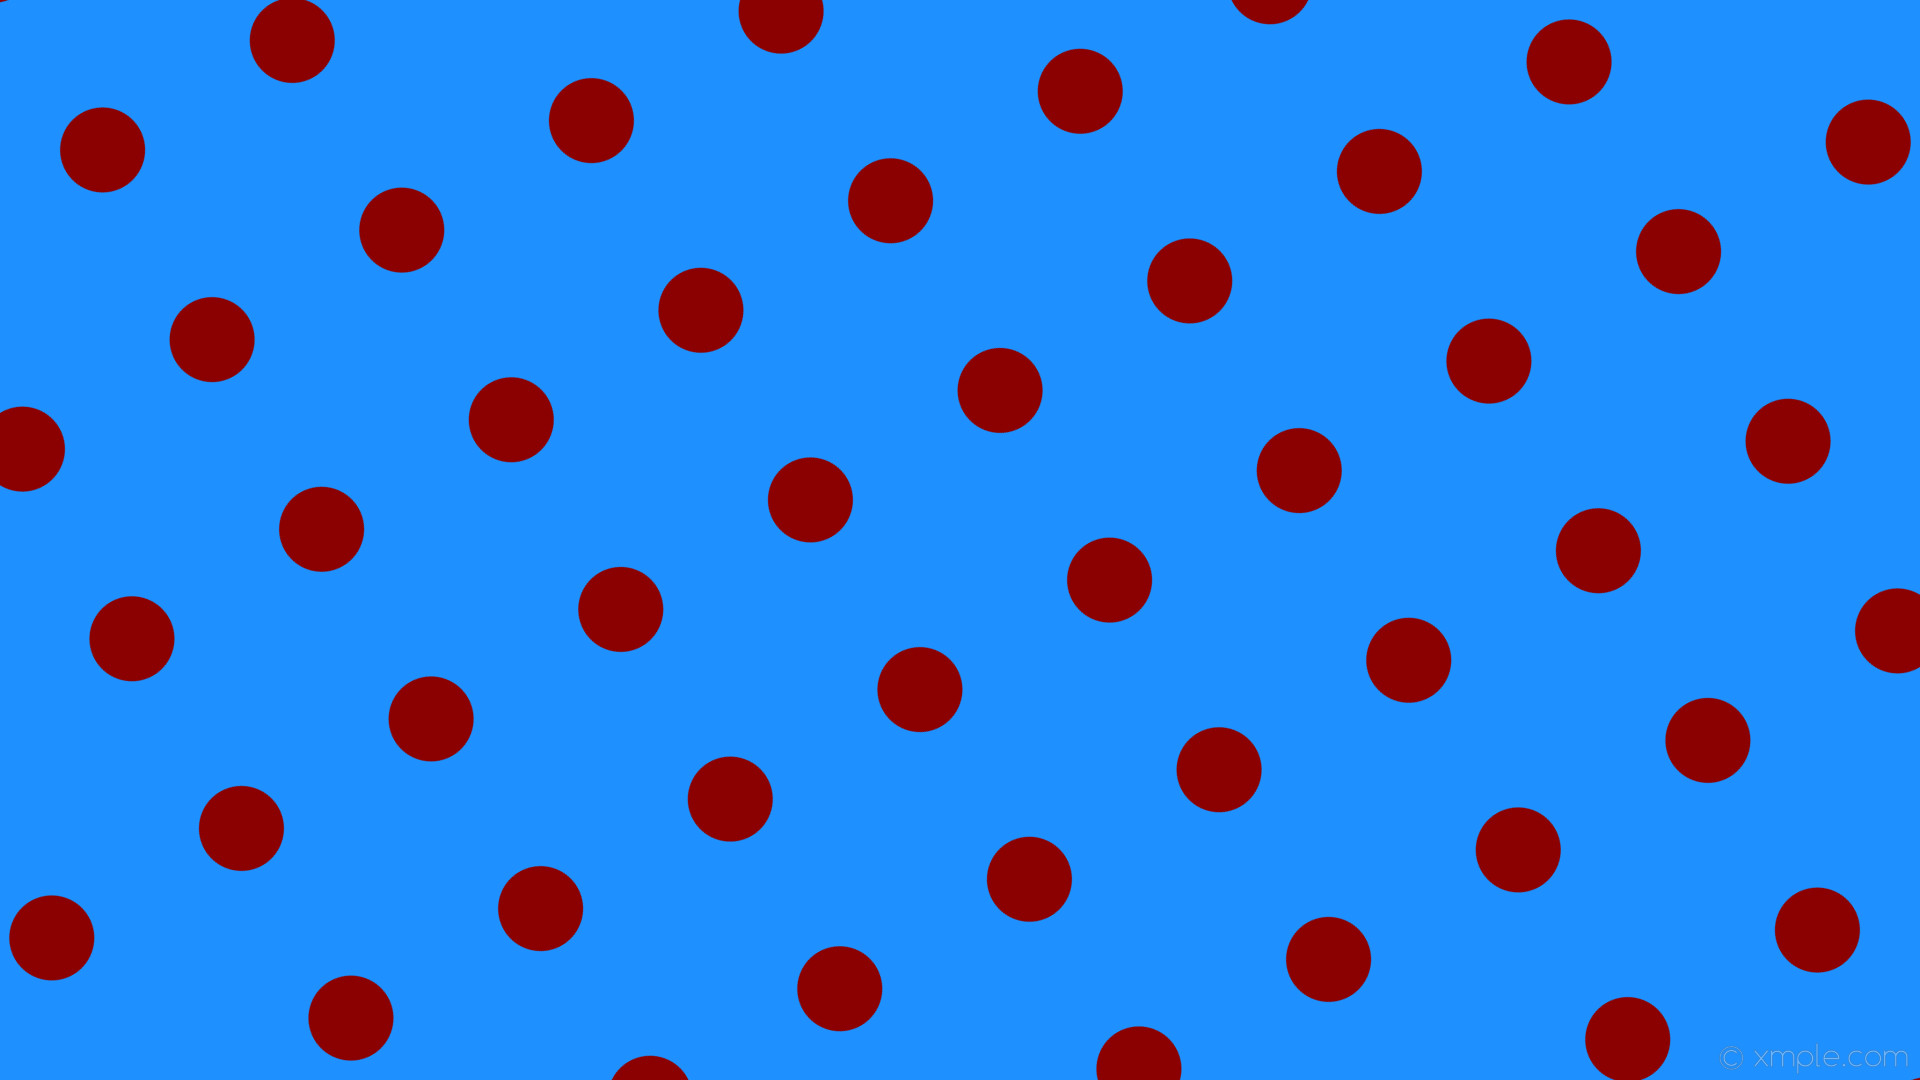 1920x1080 wallpaper blue dots spots red polka dodger blue dark red #1e90ff #8b0000  210Â°